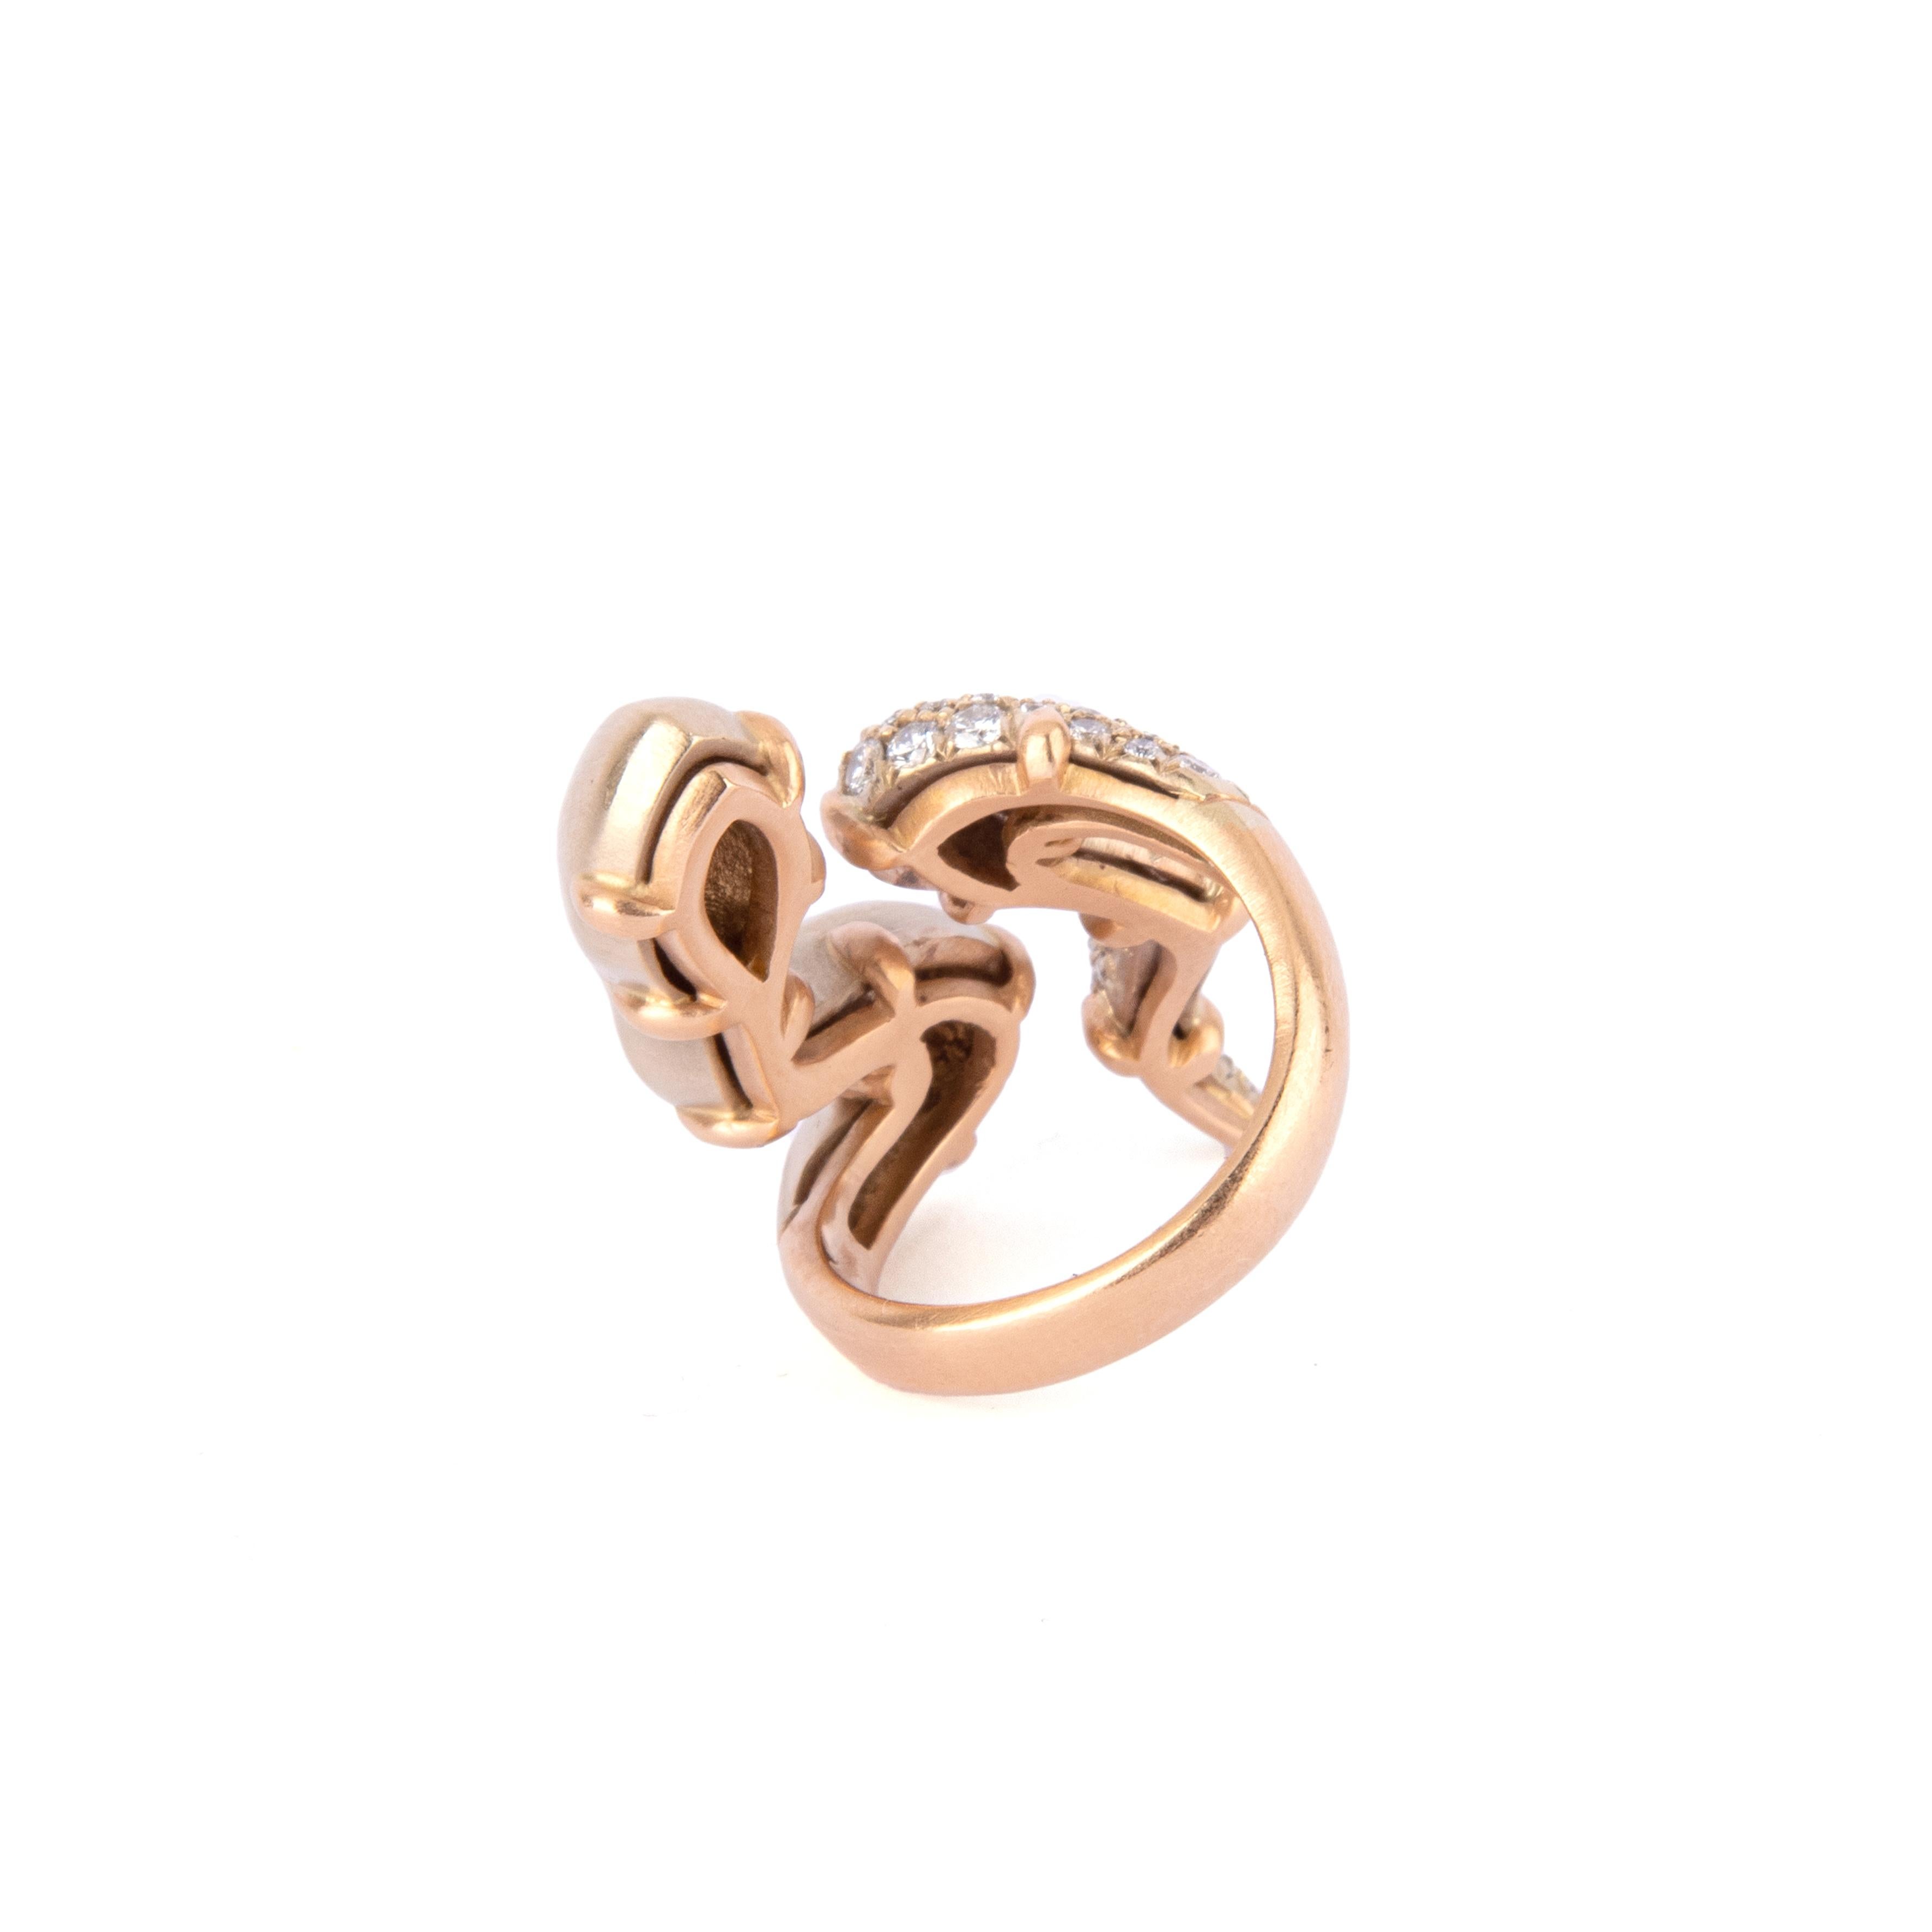 Regina Gambatesa iconic snake ring with diamonds ct. 0,86. 14,5 italian size.
Grey and red gole. Diamond, brilliant cut ct. 0,86